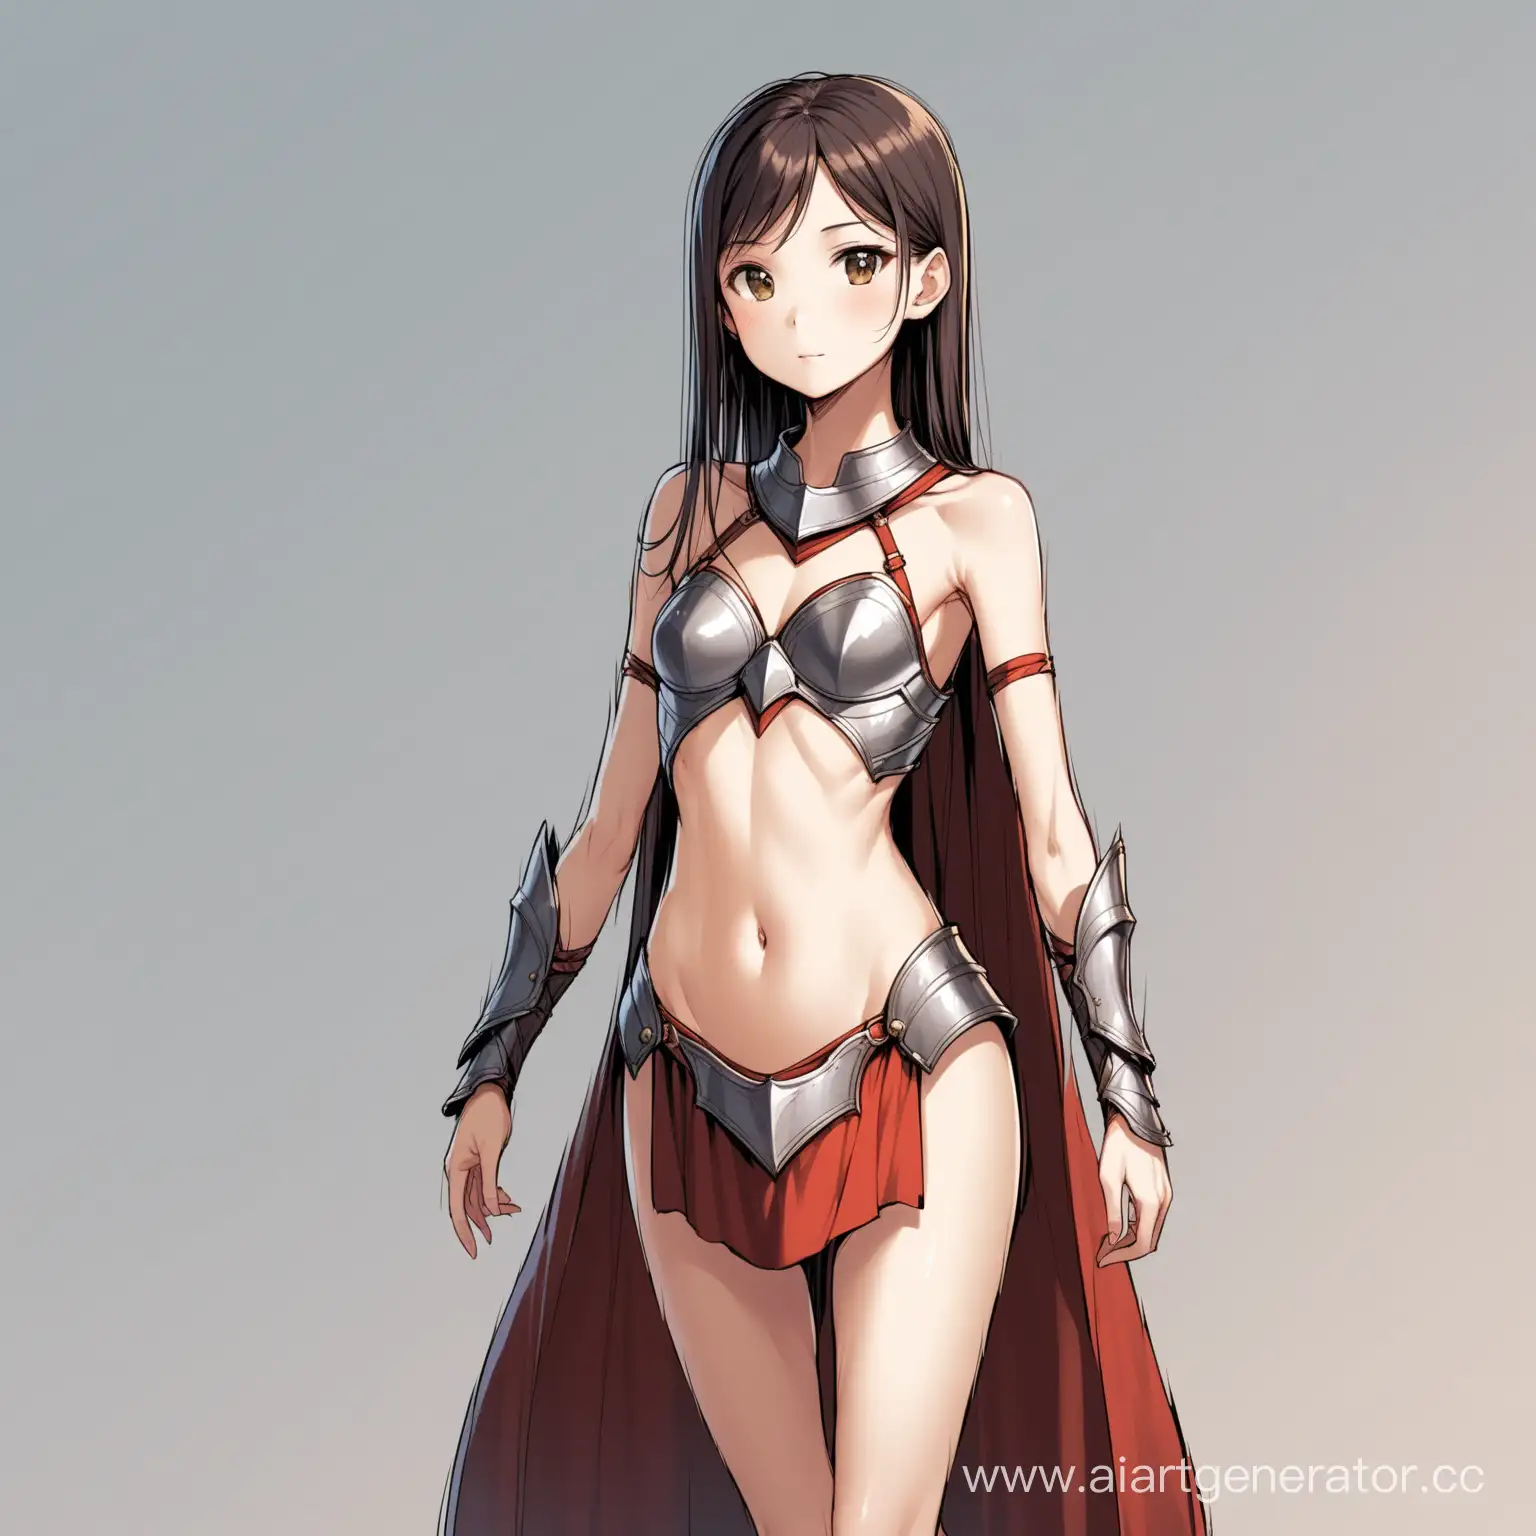 Fantasy-Warrior-Woman-in-Revealing-Armor-Dress